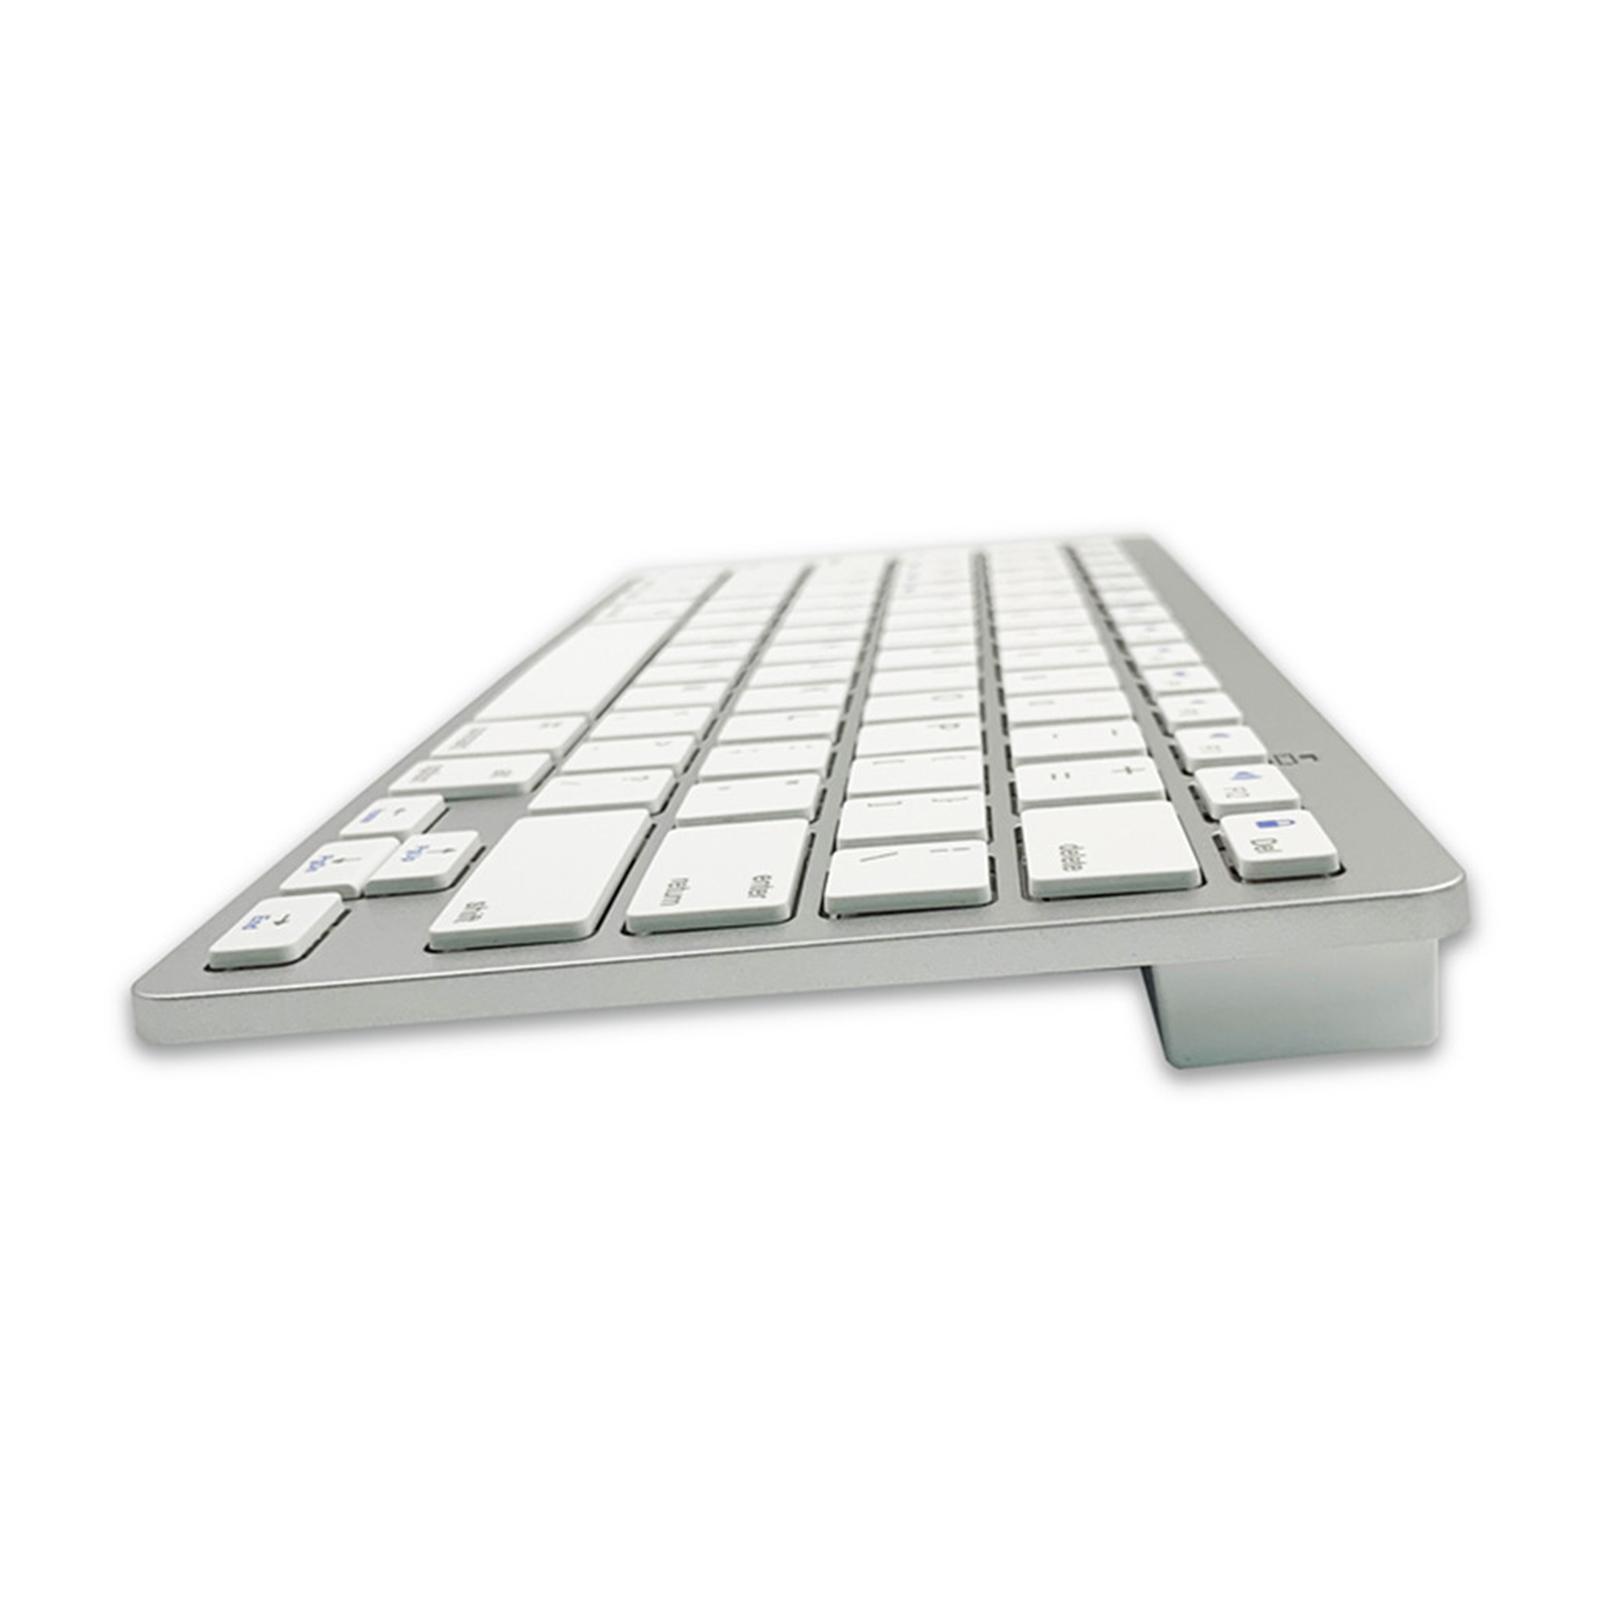 78 Keys Bluetooth Keyboard Russian for Computer Desktop Laptop Portable Slim